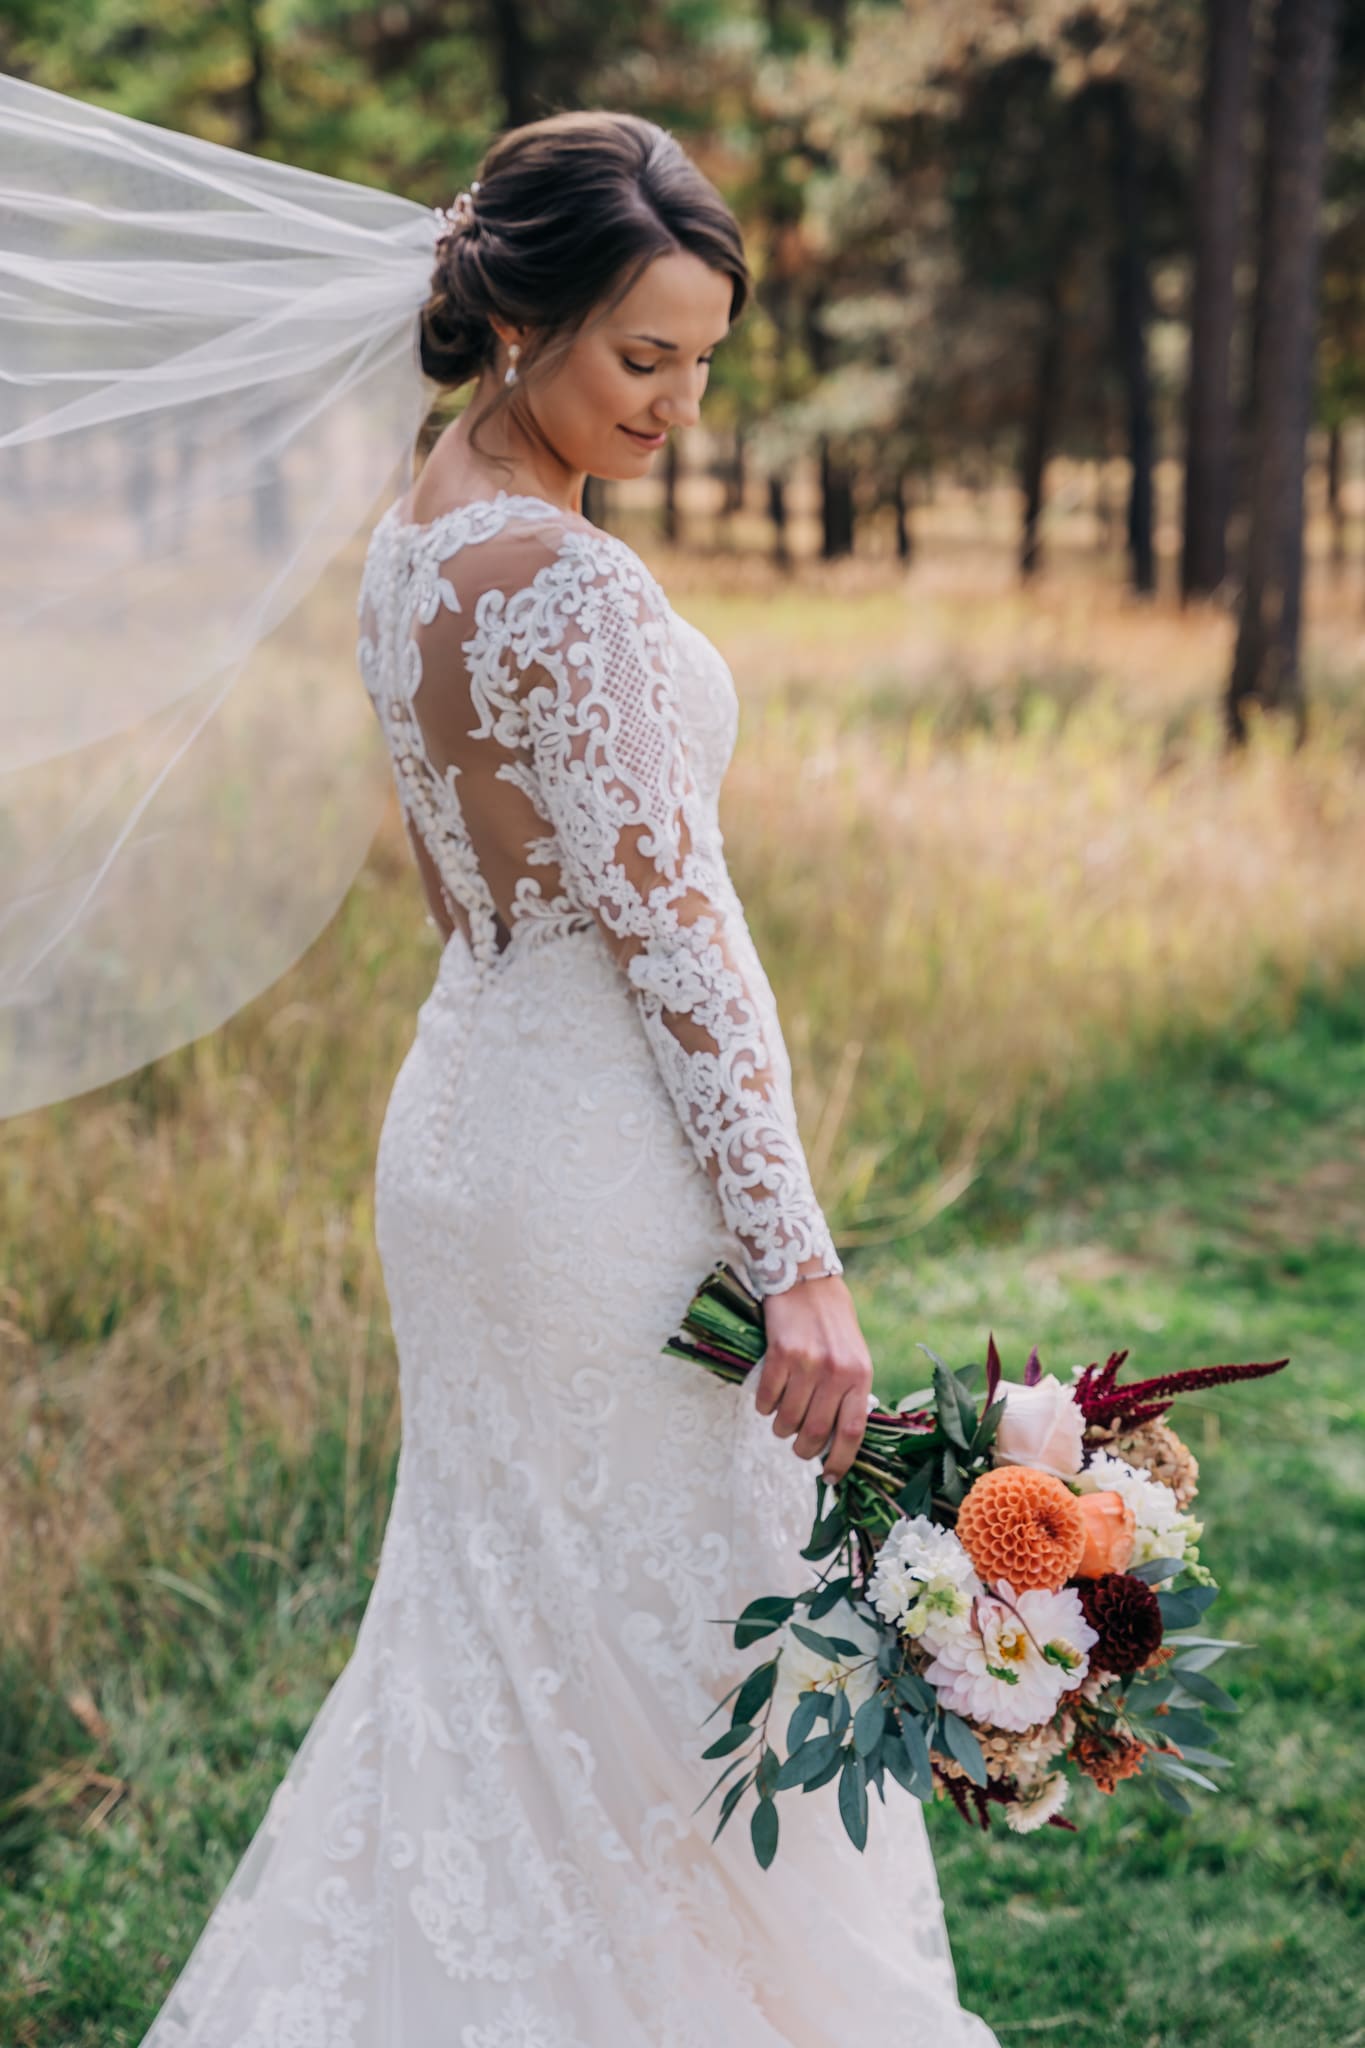 Edison + Melissa | Backyard Spokane Wedding - Charles Moll Photography